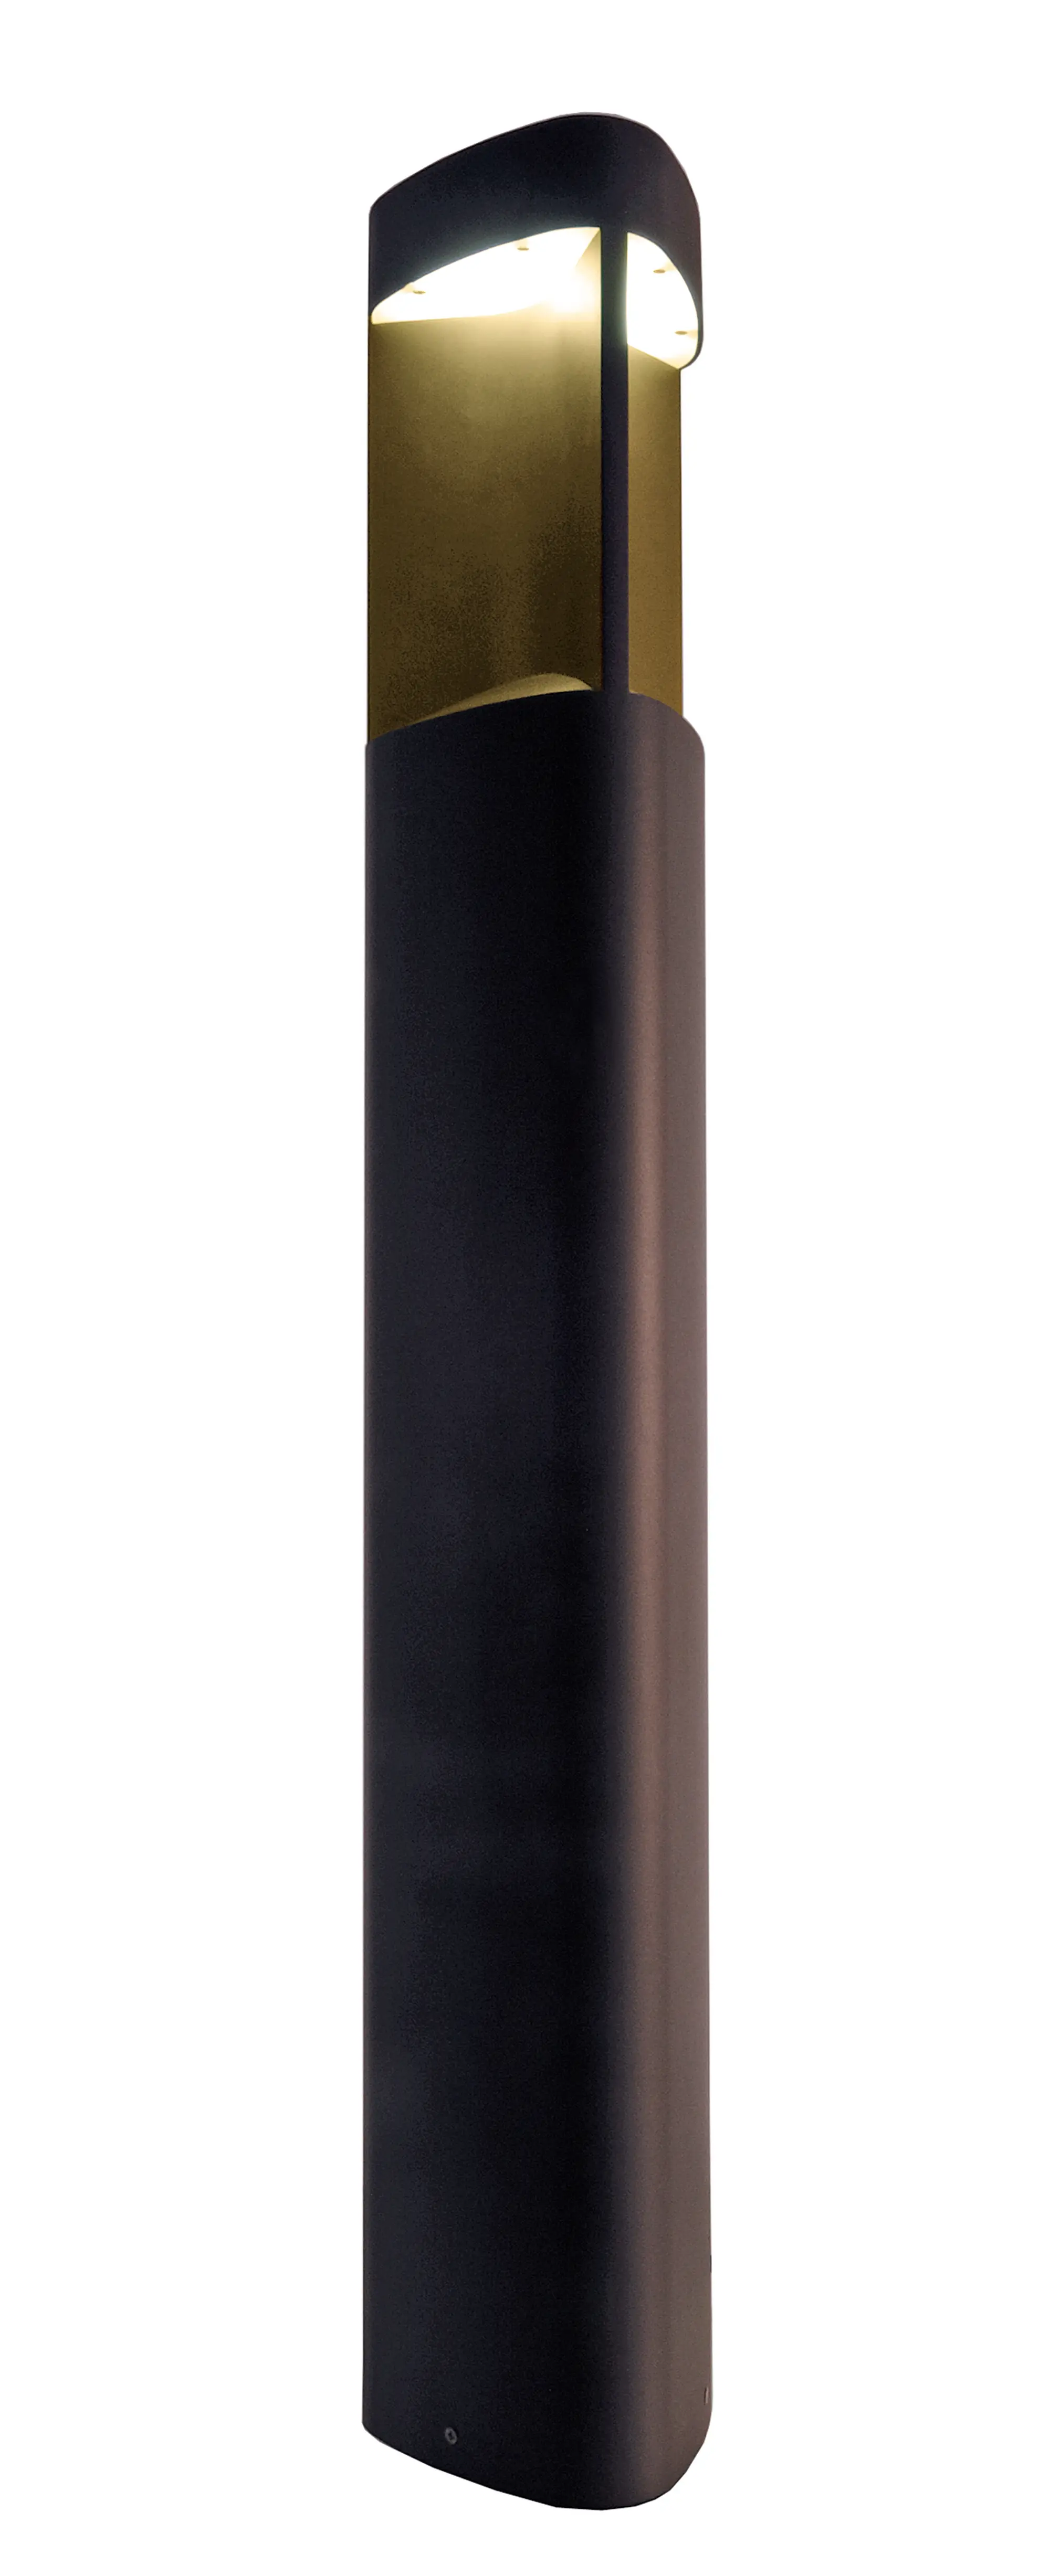 LED-Wegelampe Trila Shine II in grau, 80cm